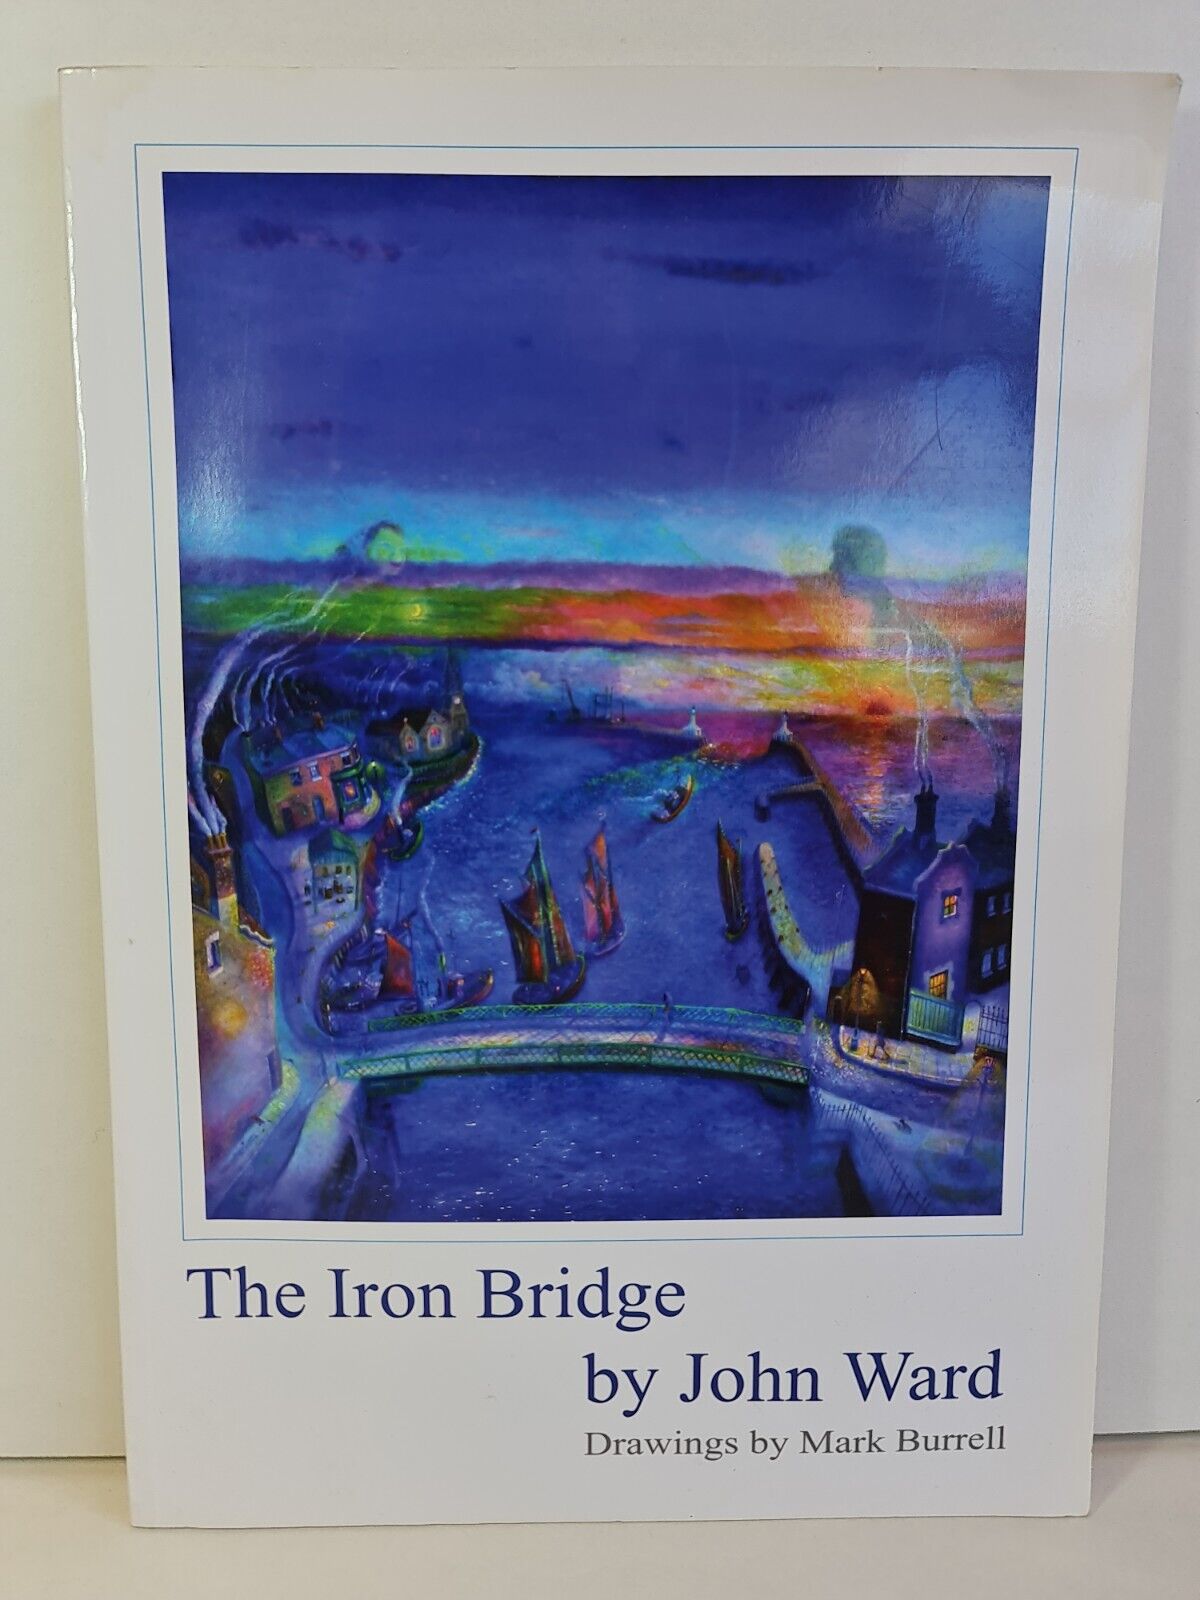 The Iron Bridge: An Epic Poem of Lowestoft by John Ward